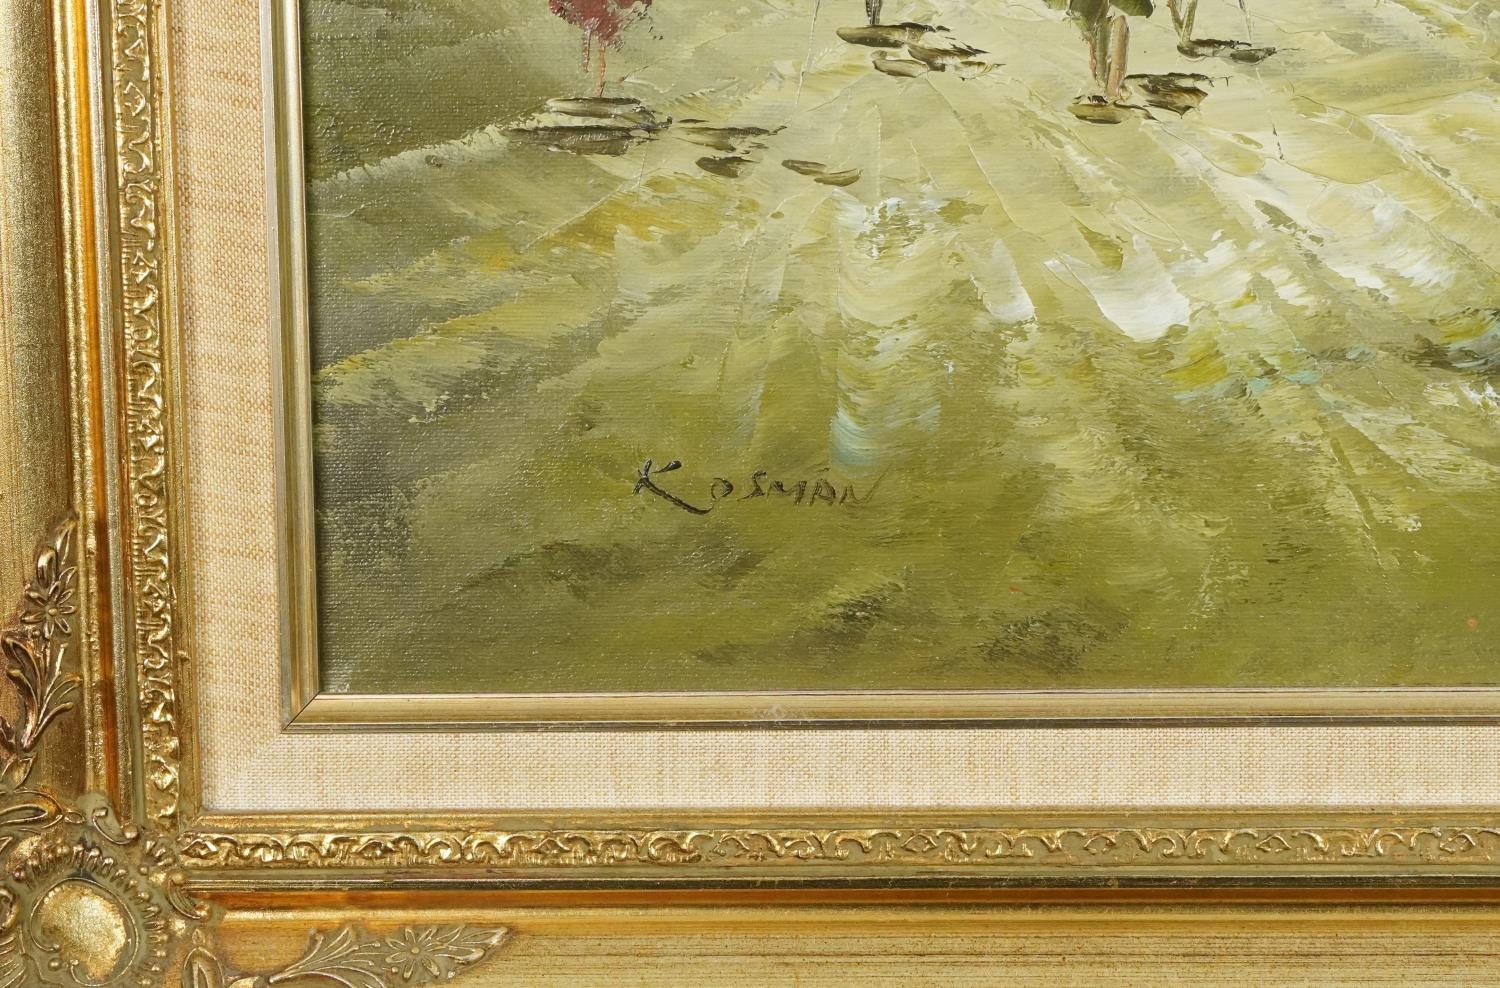 Kosman - Parisian street scene, impressionist oil on canvas, mounted and framed, 59.5cm x 50cm - Image 3 of 5